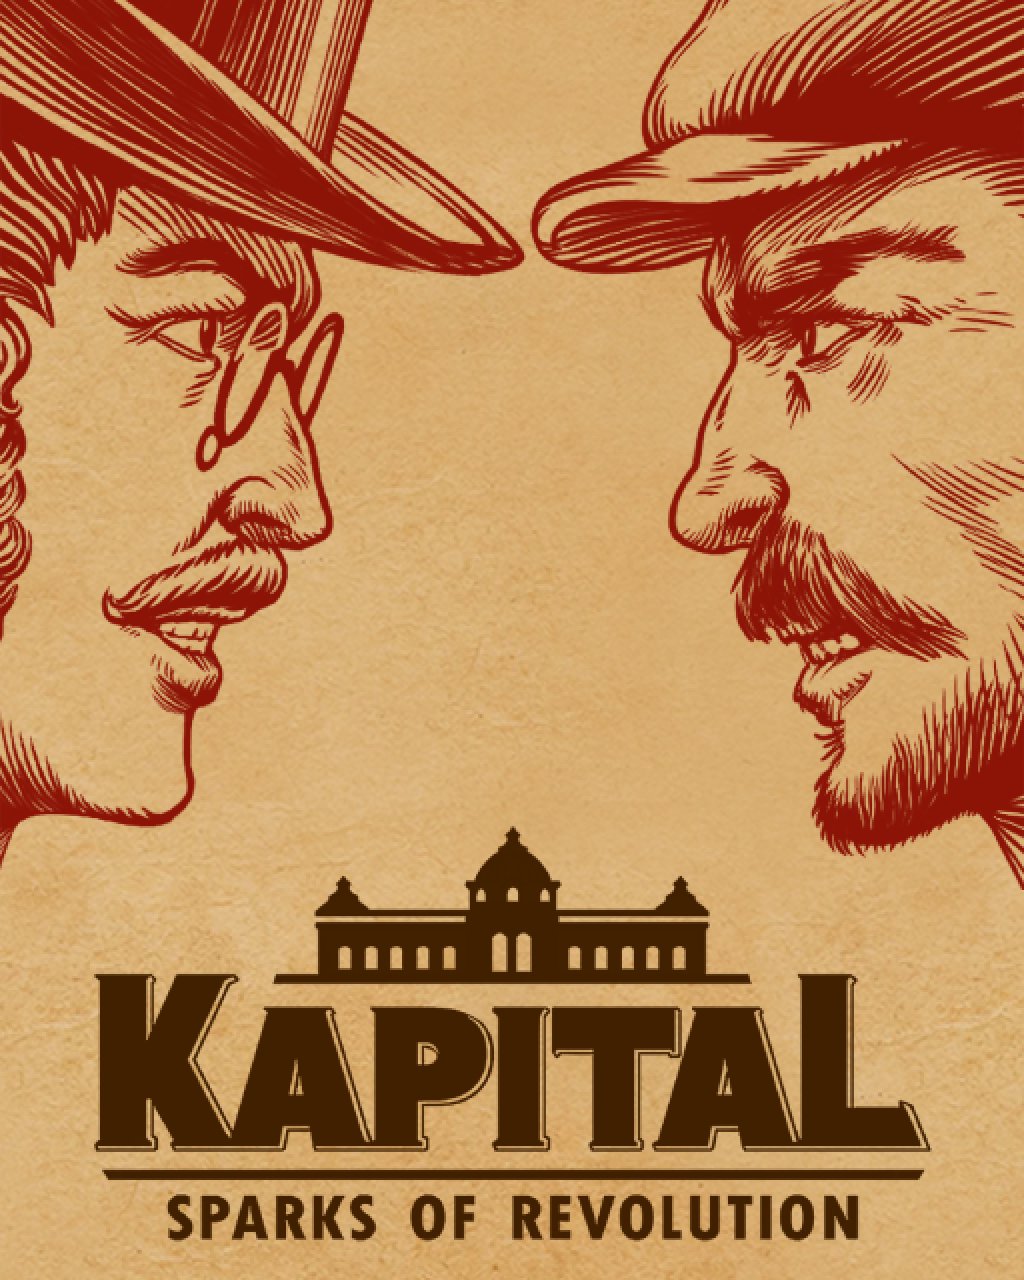 Kapital Sparks of Revolution